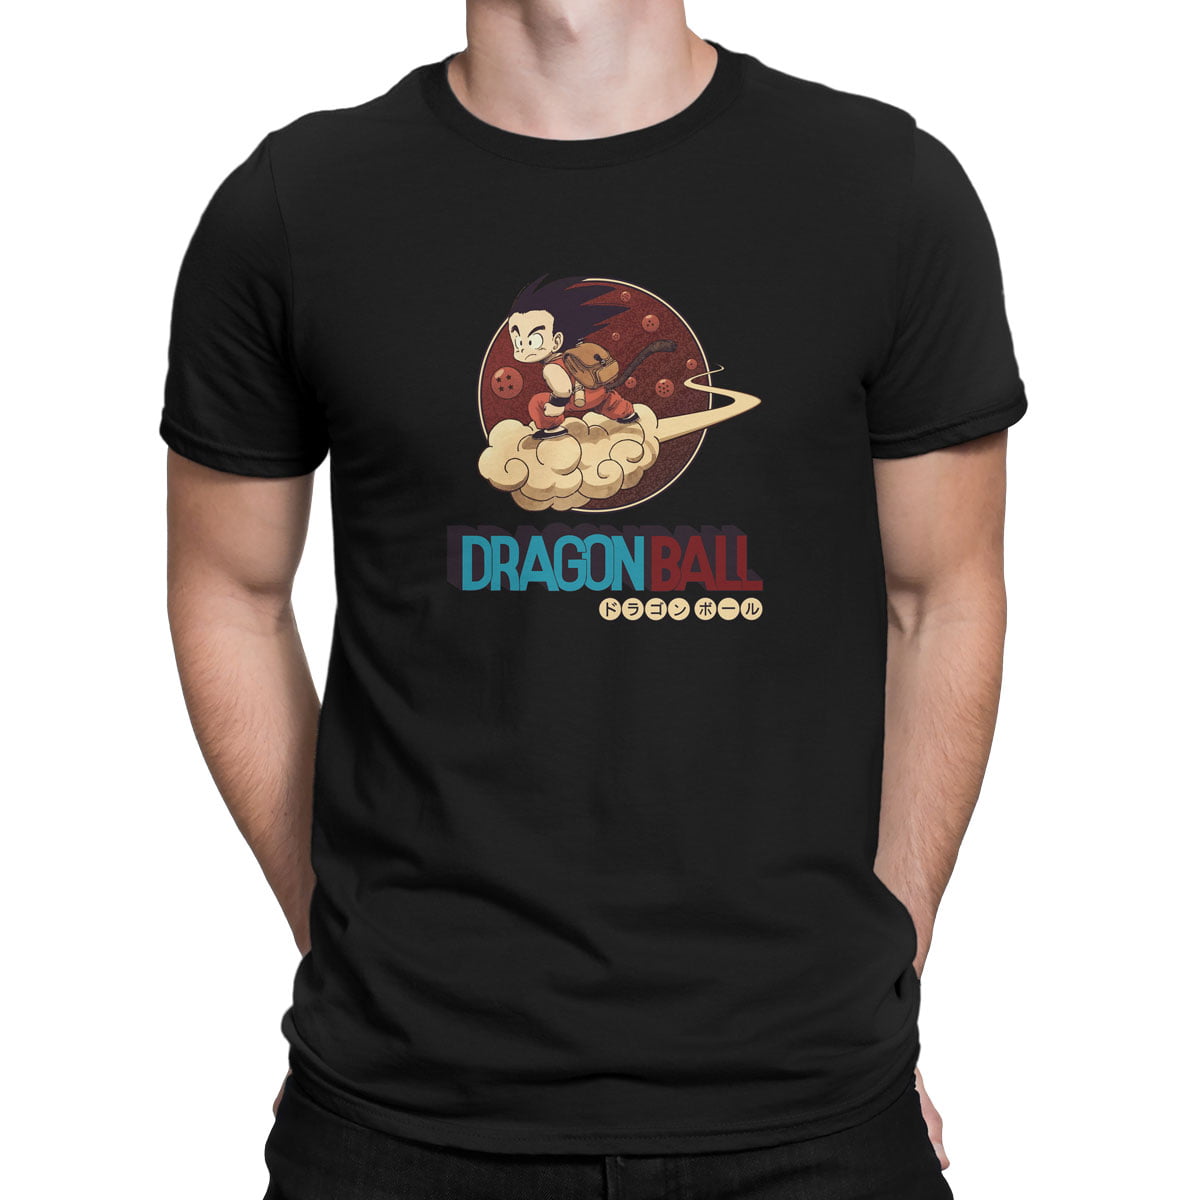 Dragonball 1 tshirt s erkek 1 - dragon ball goku no3 baskılı erkek t-shirt - figurex